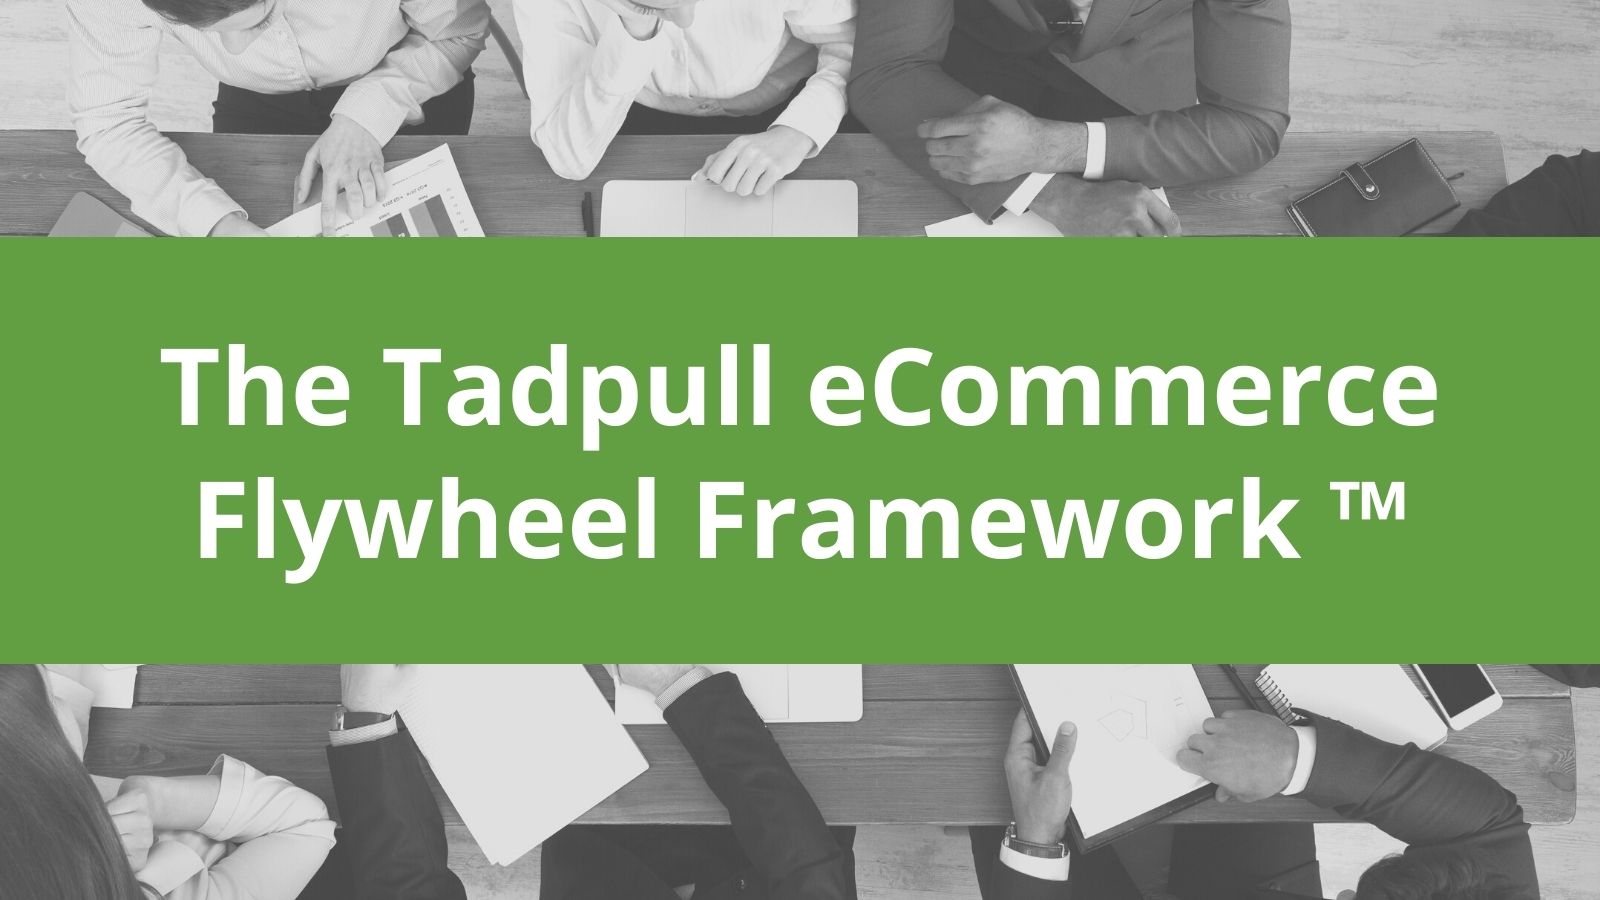 Grow your Business: The Ecommerce Flywheel Framework ™